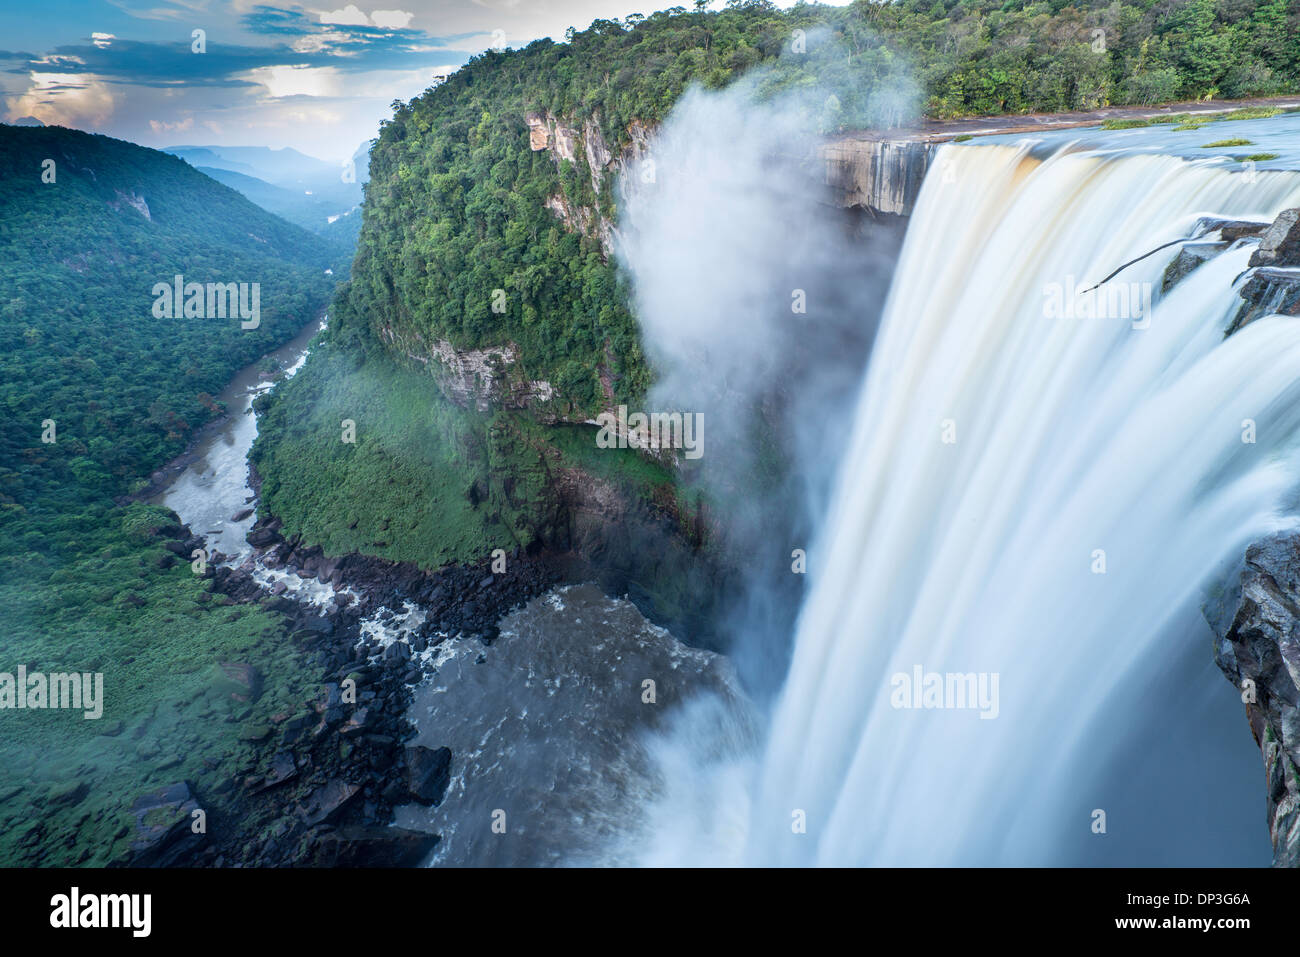 Kaieteur Falls, Kaieteur Parco Nazionale, Guyana, fiume di patate, combina un enorme volume di acqua con 822 foot drop Foto Stock